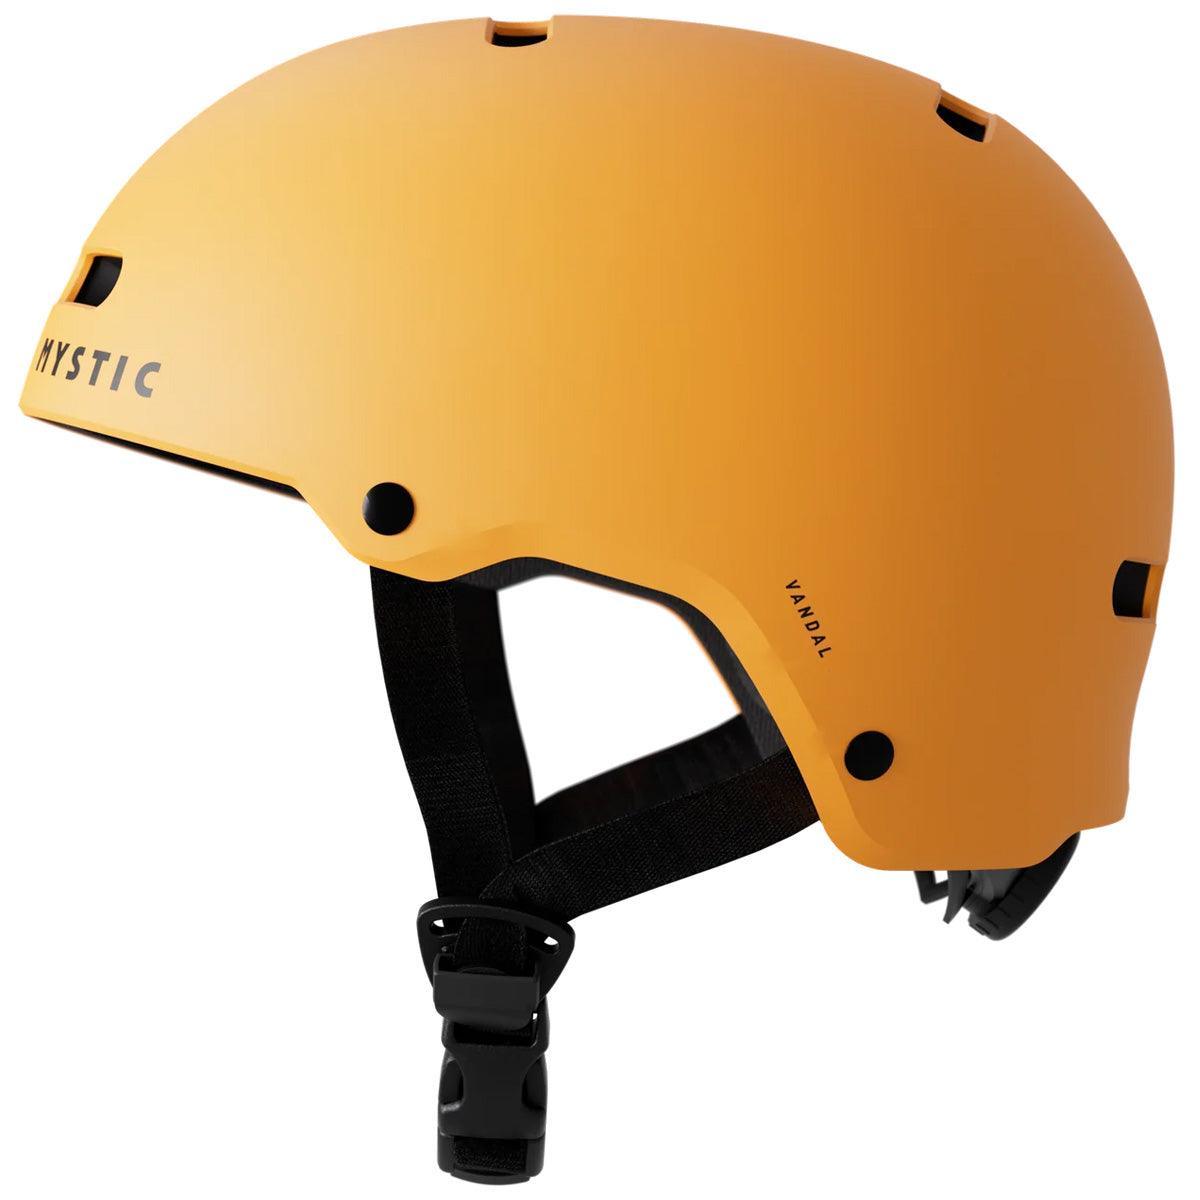 Mystic Vandal Helmet - Powerkiteshop